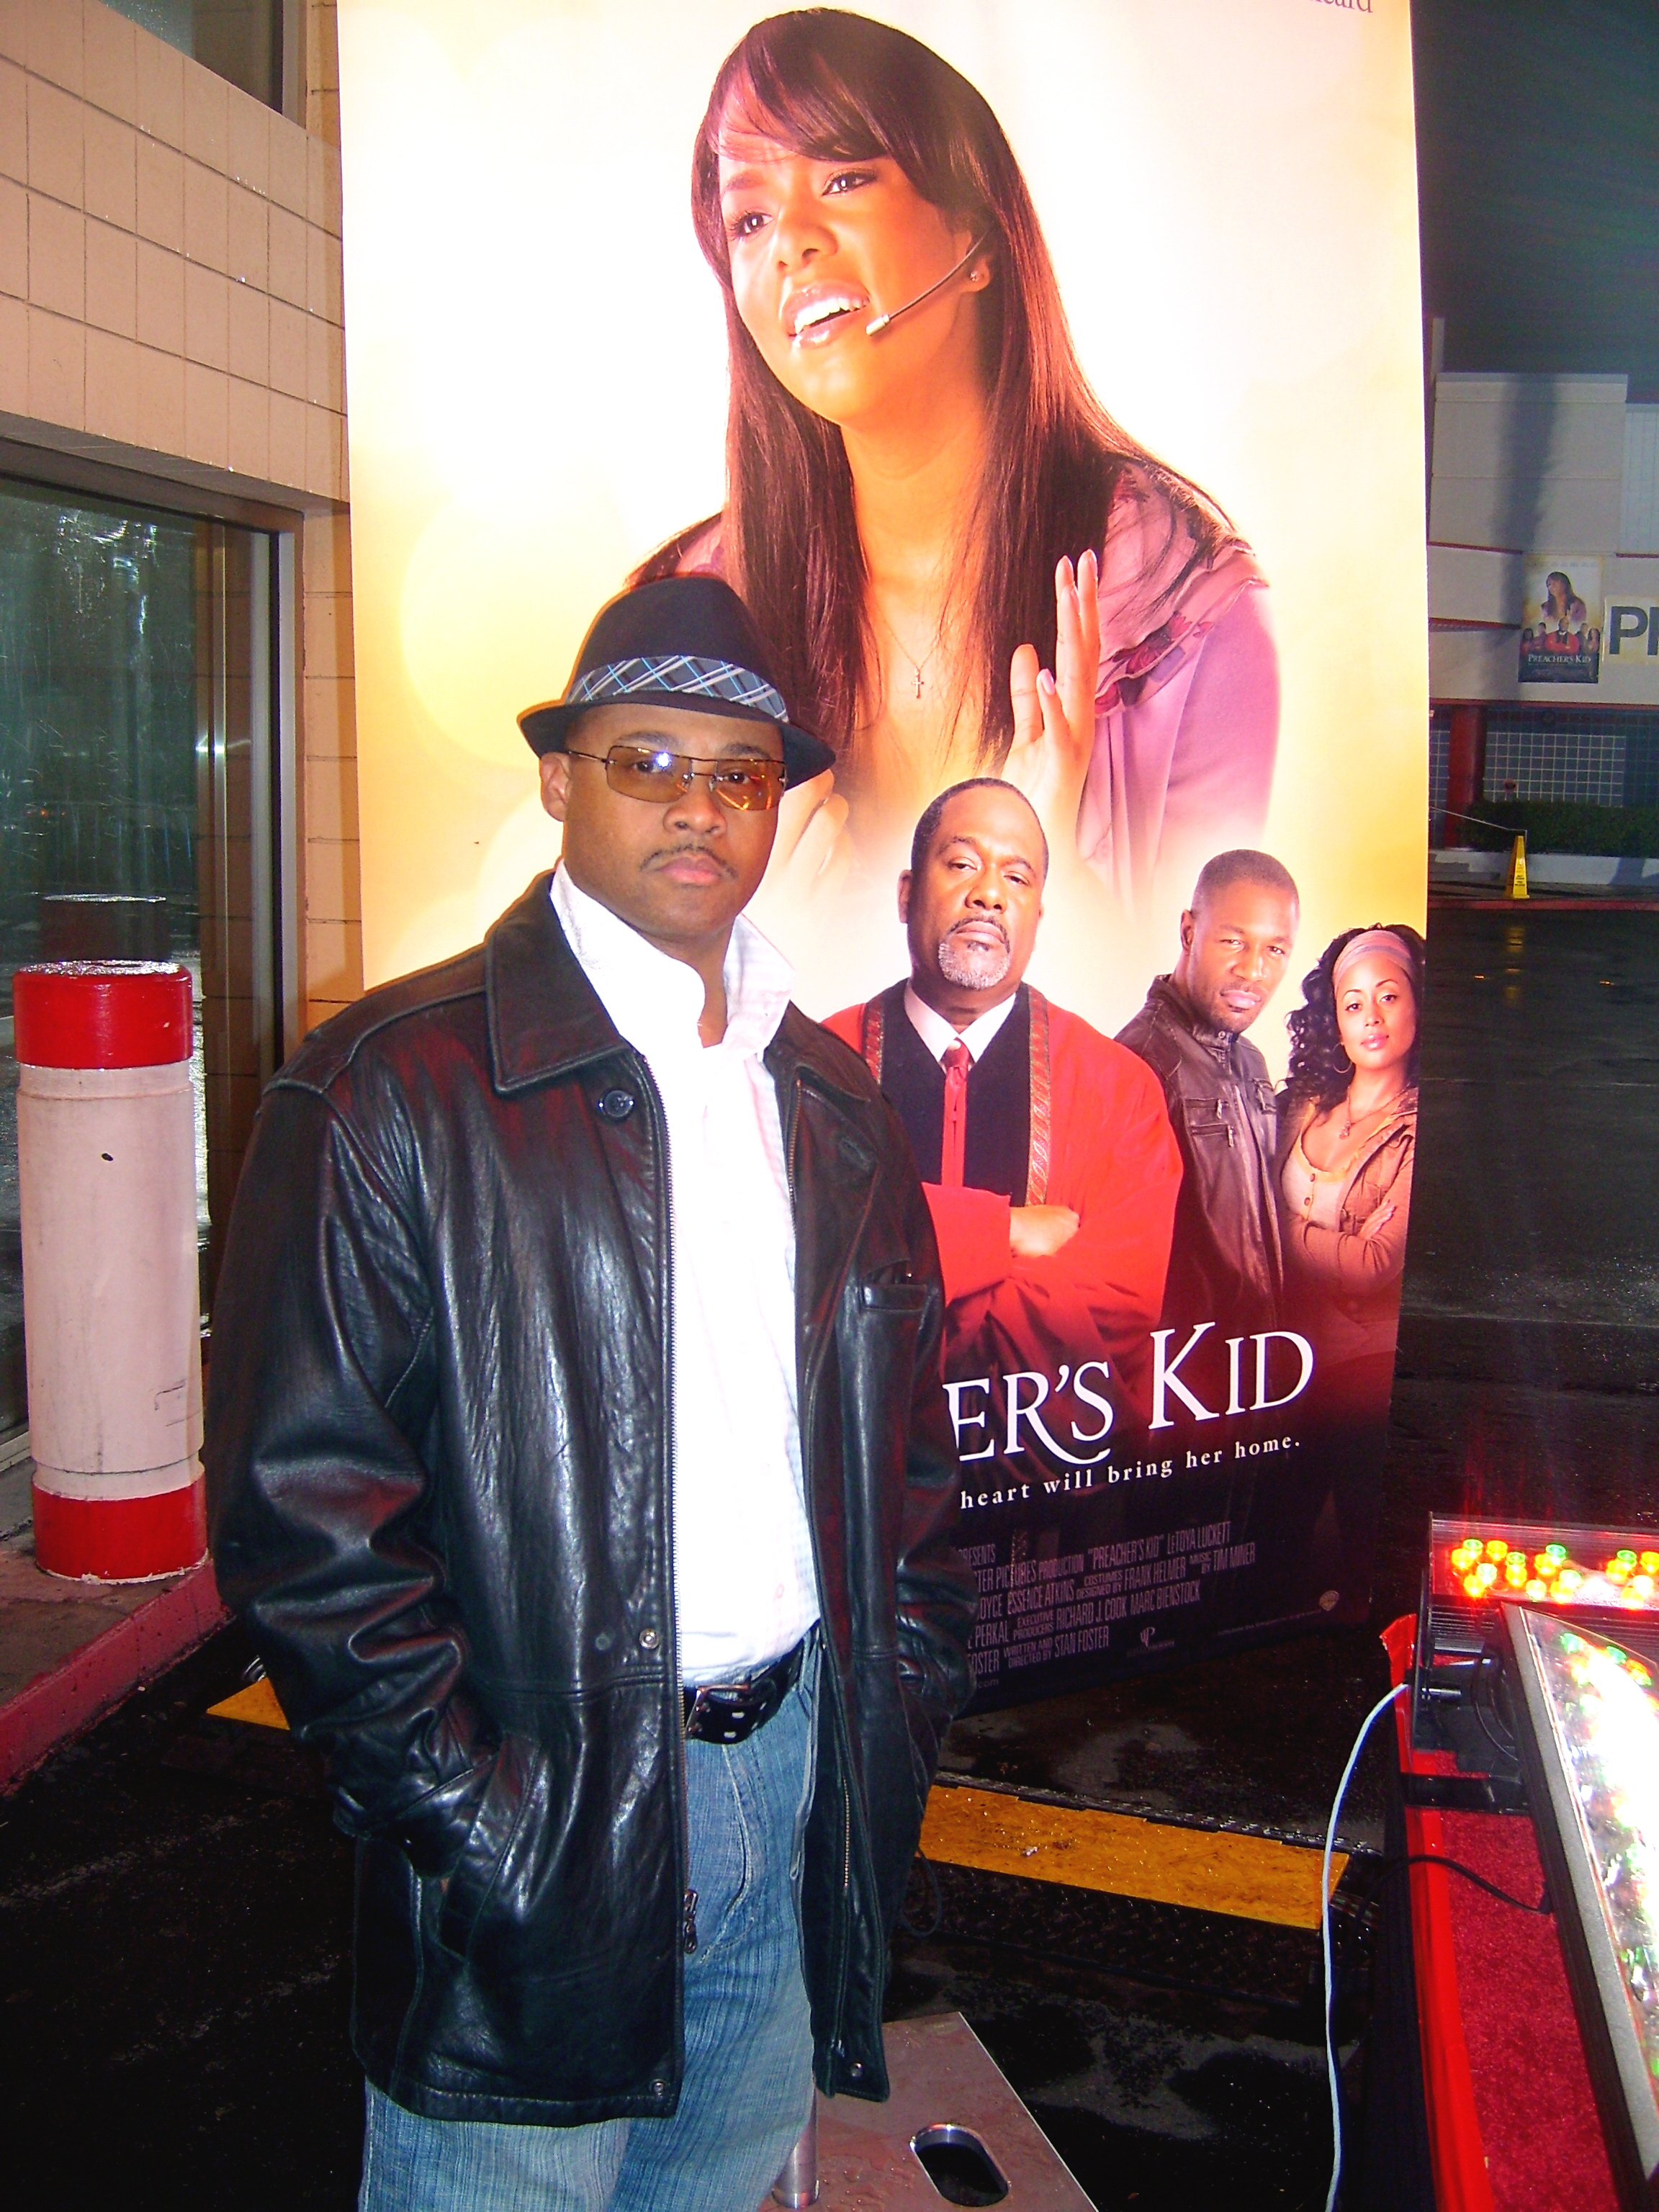 Rugg Williams at the Precher's Kid Film Premiere in Los Angeles